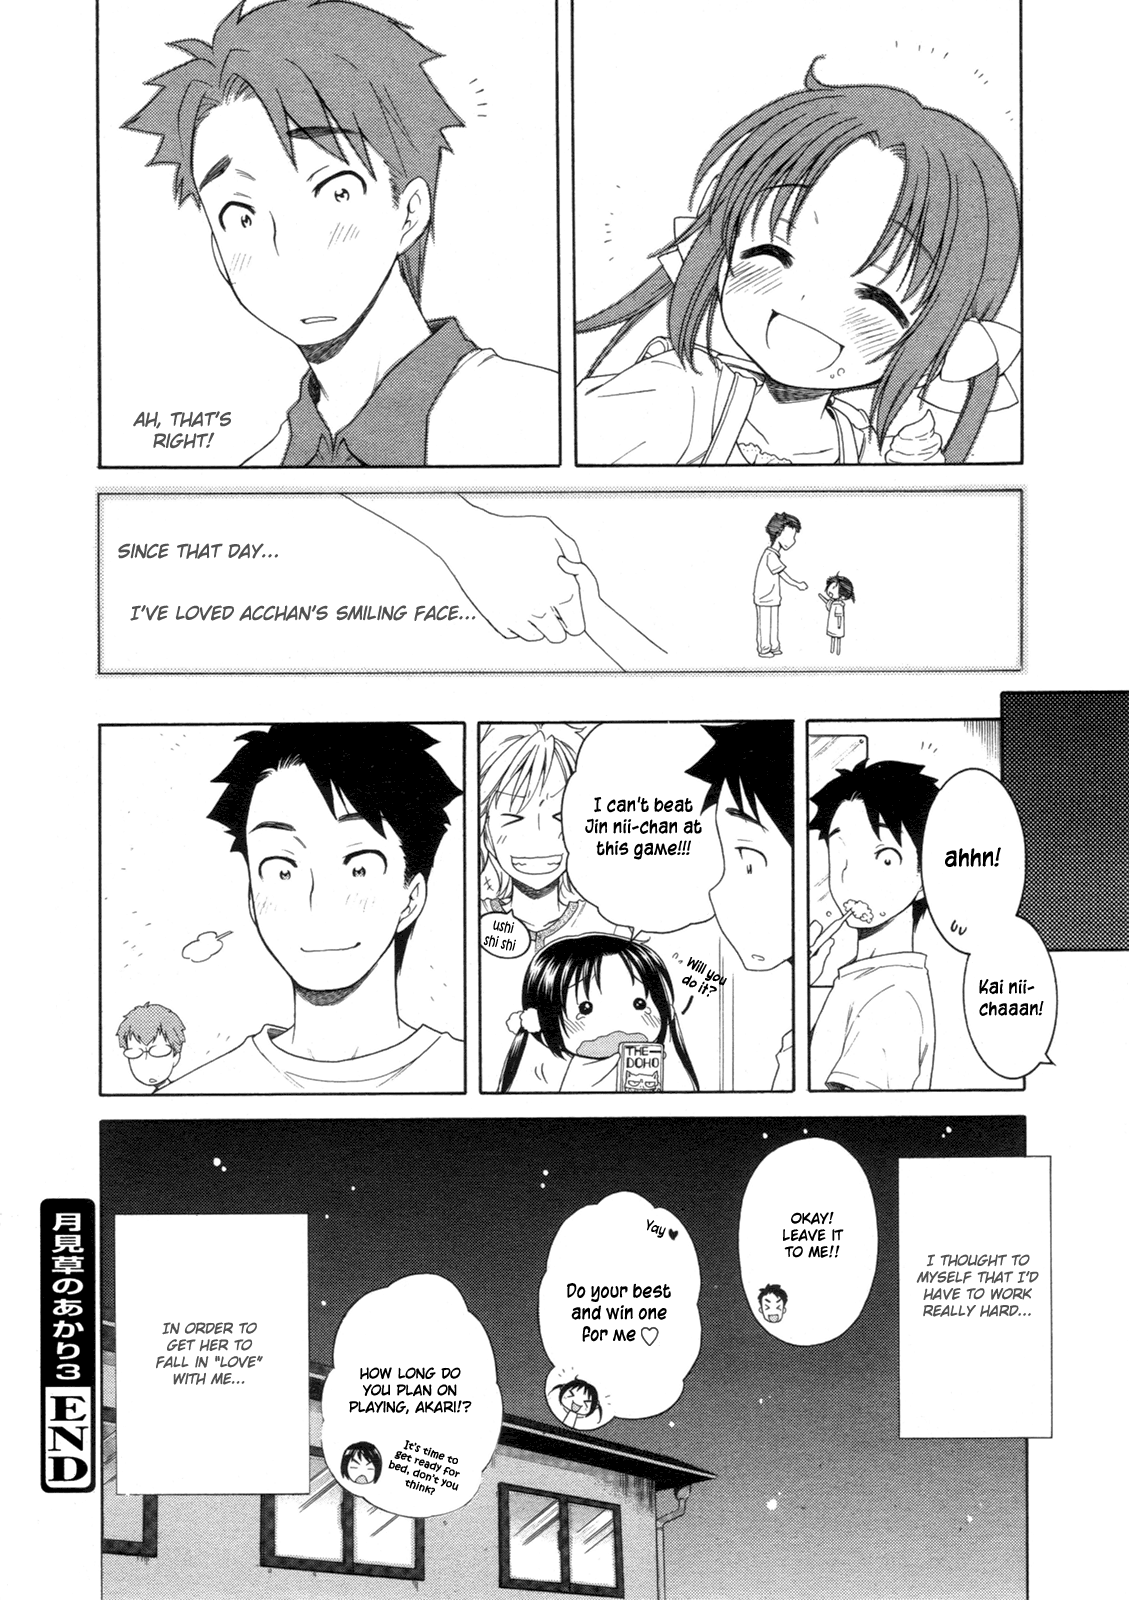 The Light of Tsukimi Manor 1-6 hentai manga picture 68